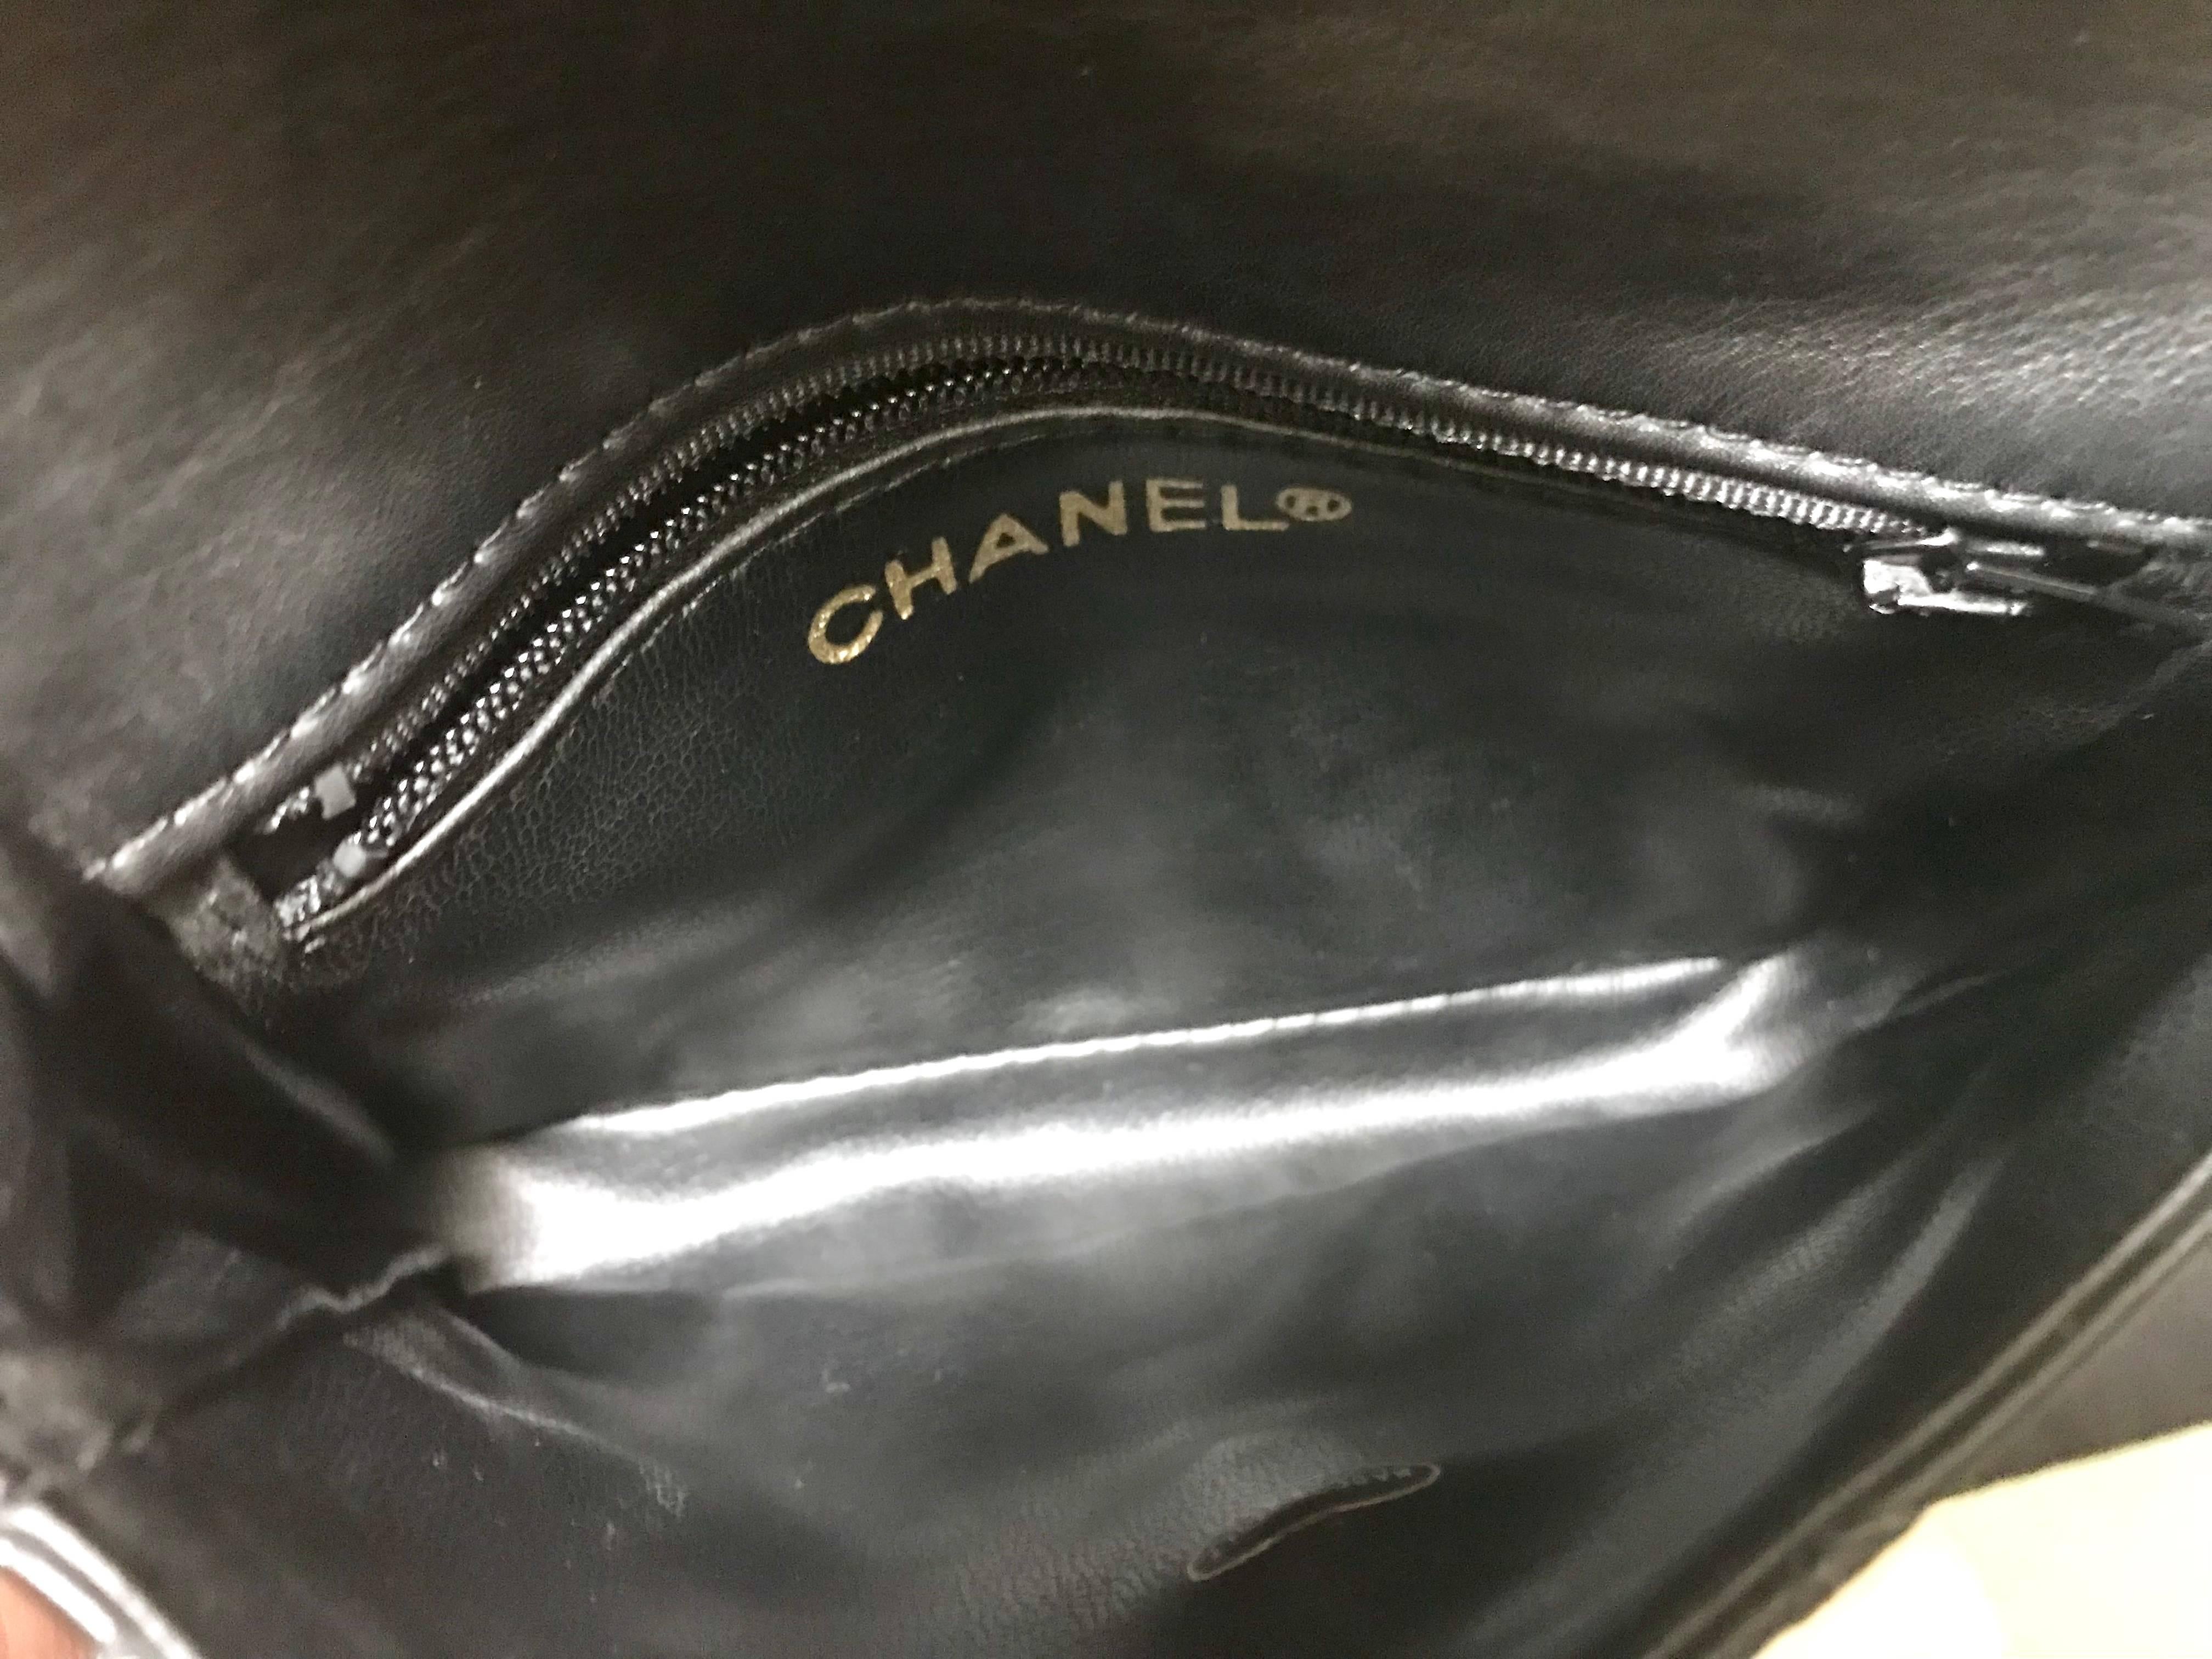 Vintage CHANEL black leather waist purse, fanny pack, hip bag with golden CC. 6